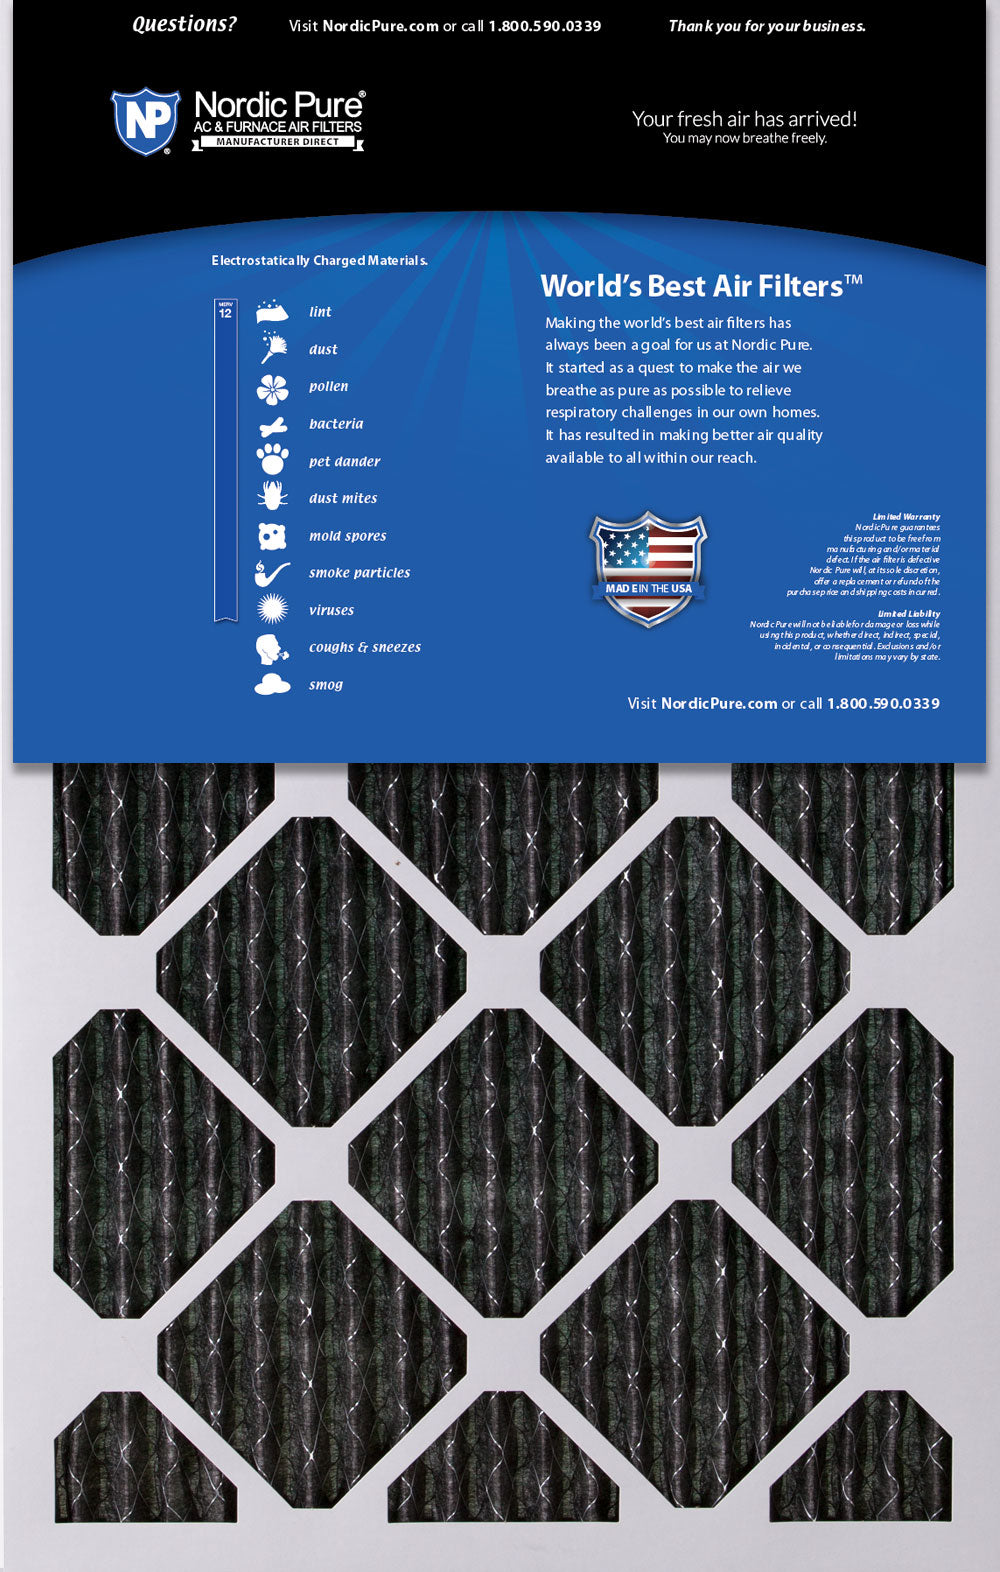 9x27x1 Exact MERV 12 Plus Carbon AC Furnace Filters